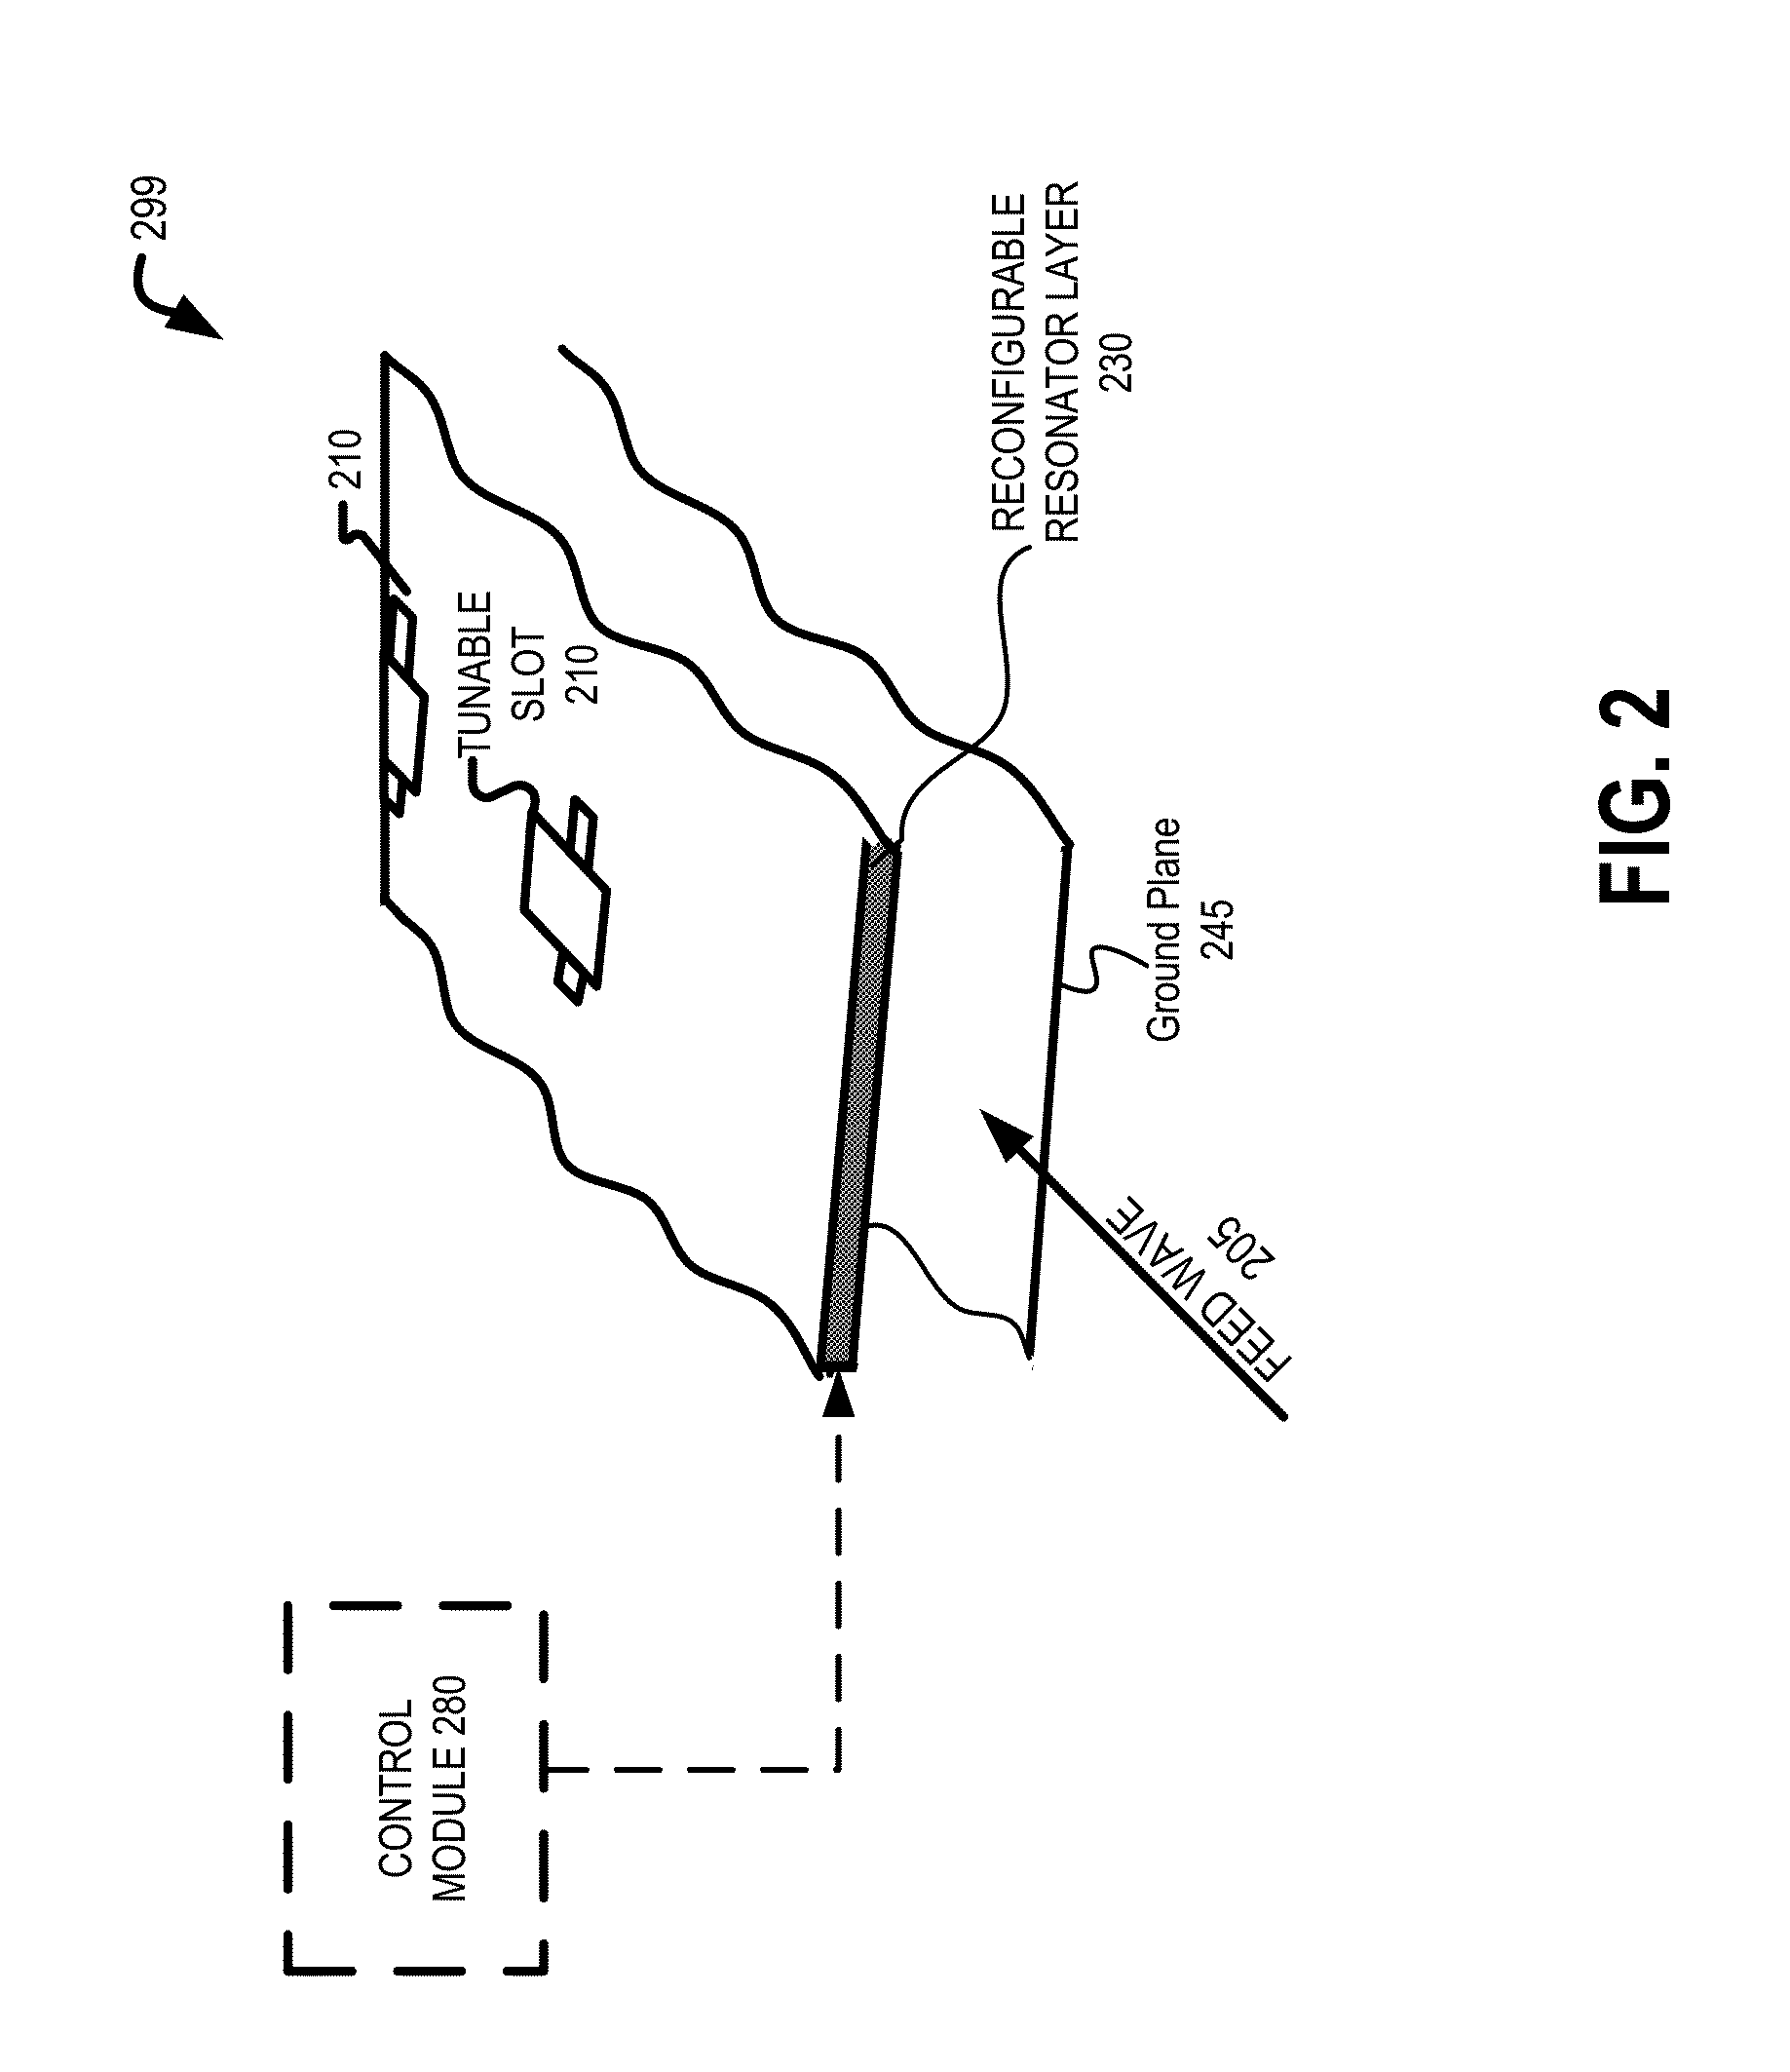 Aperture segmentation of a cylindrical feed antenna